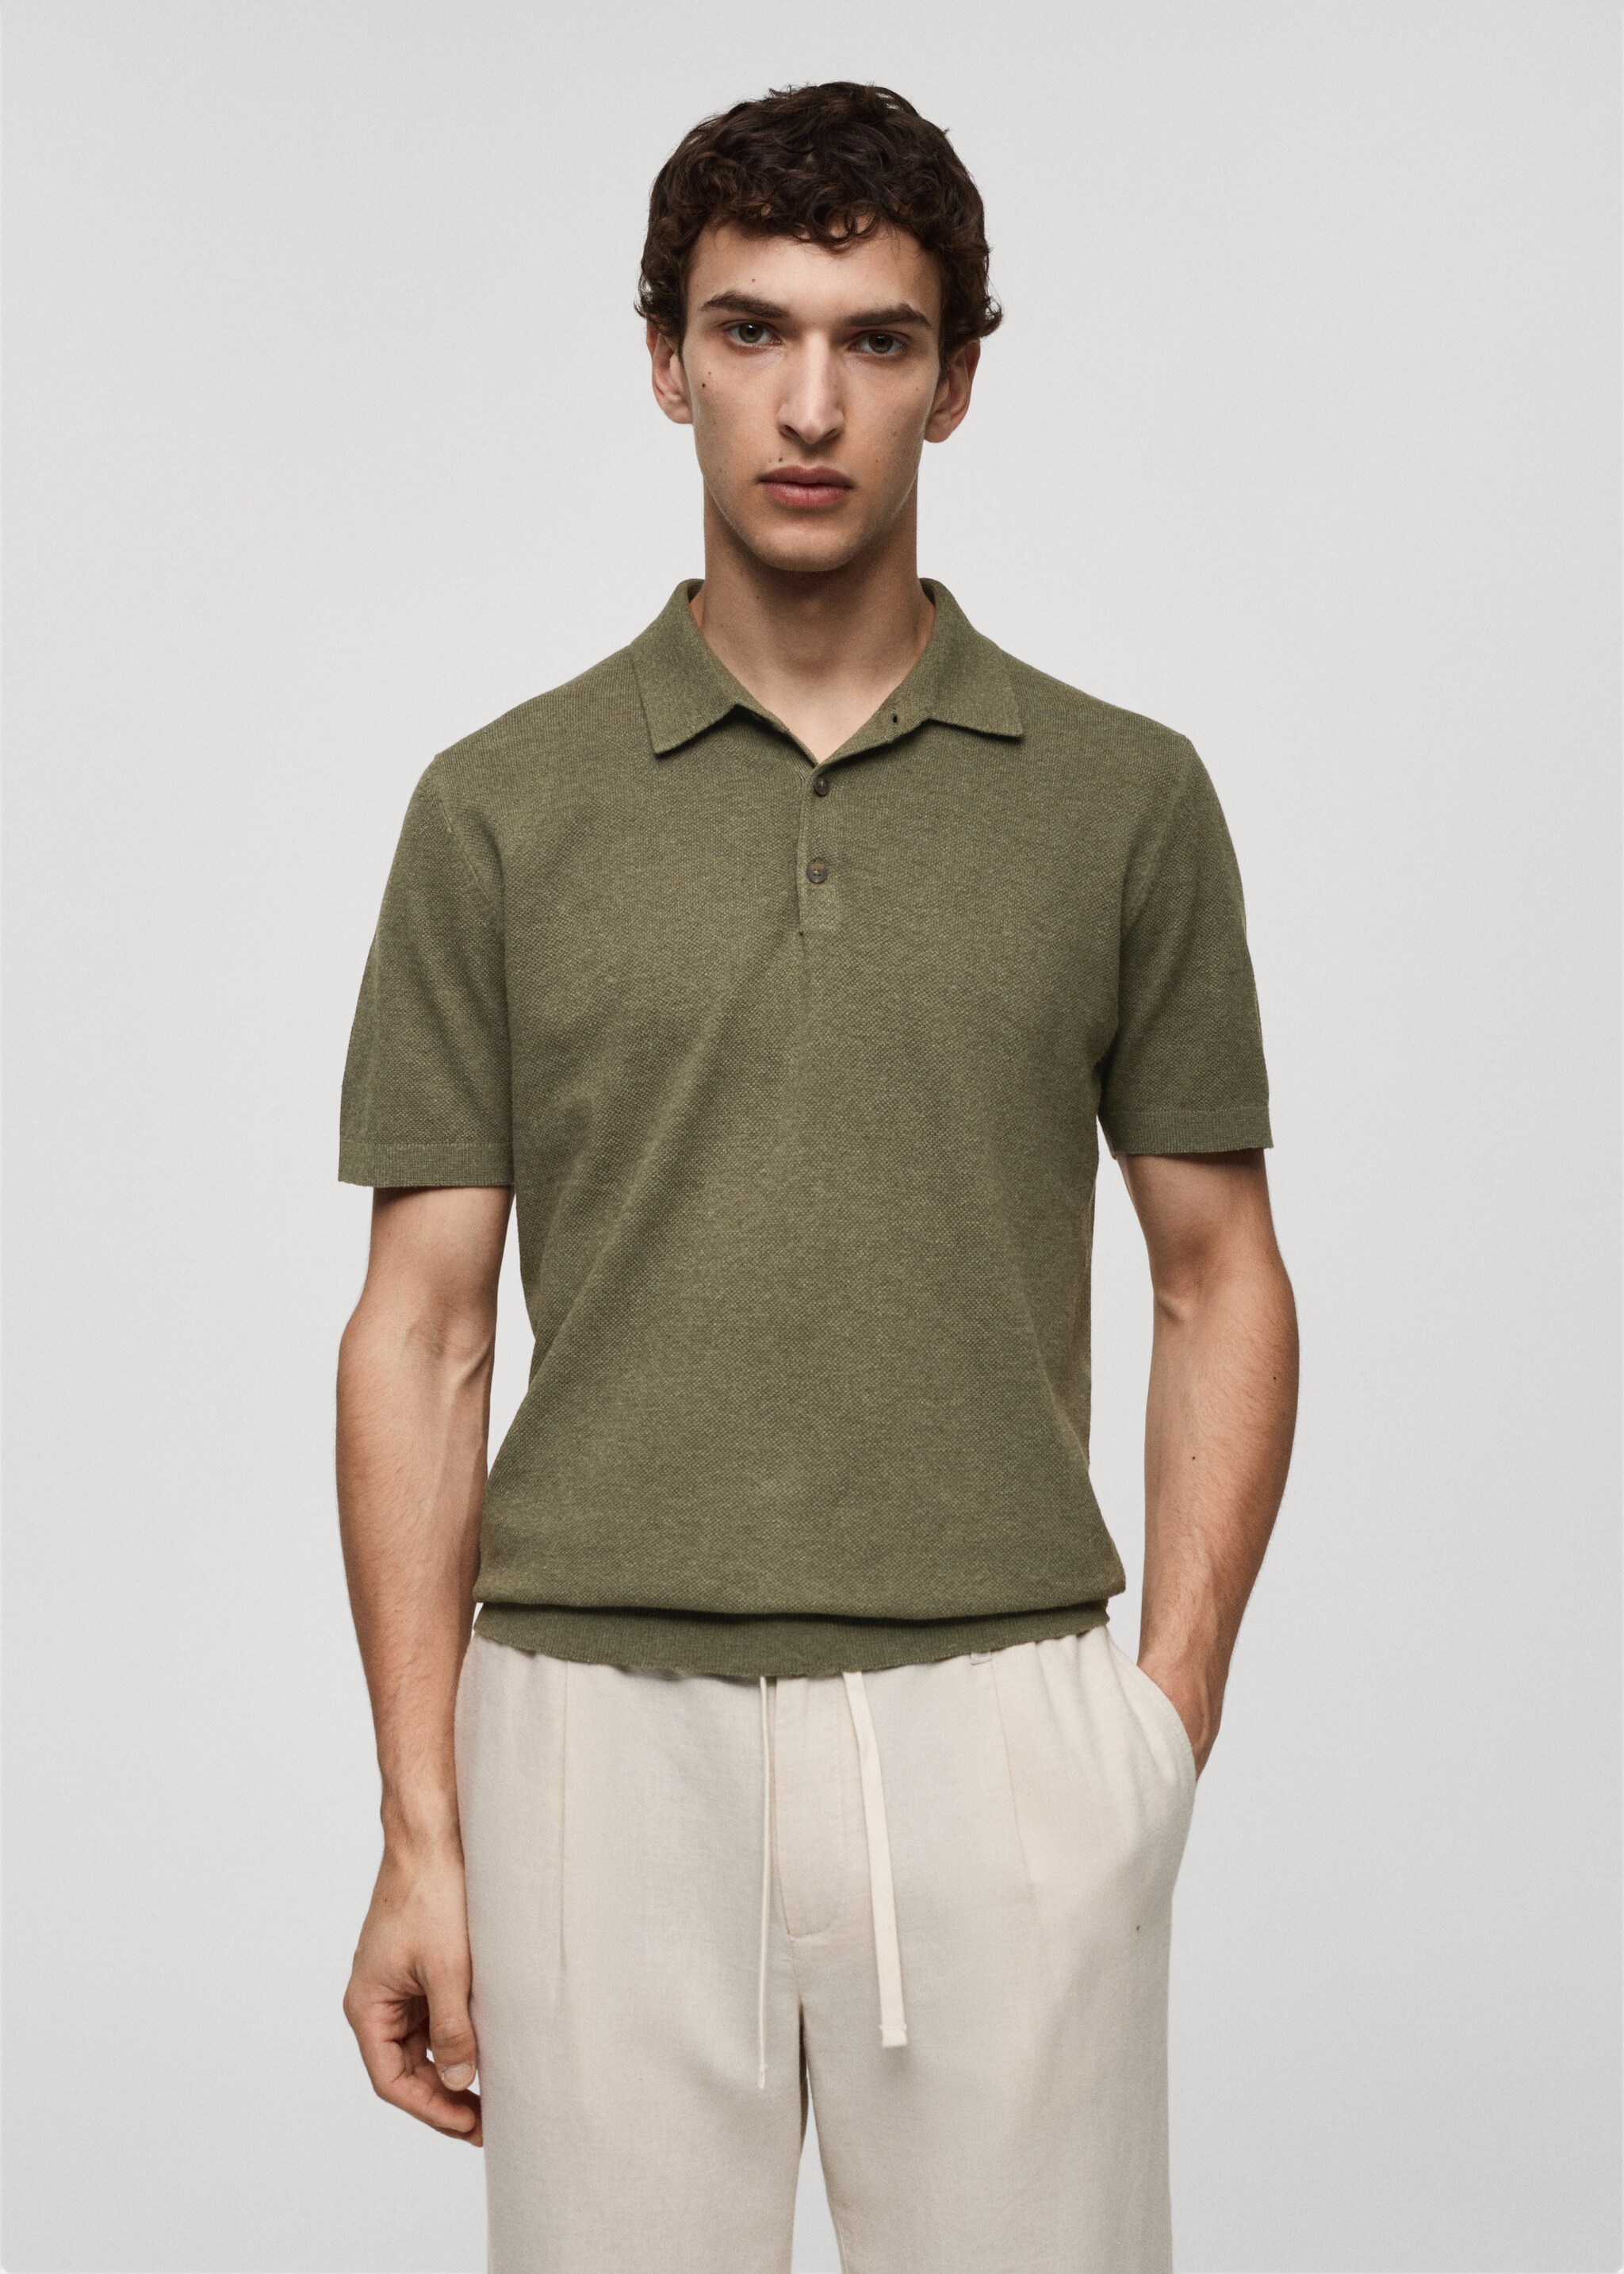 Short-sleeve knitted polo shirt - Medium plane